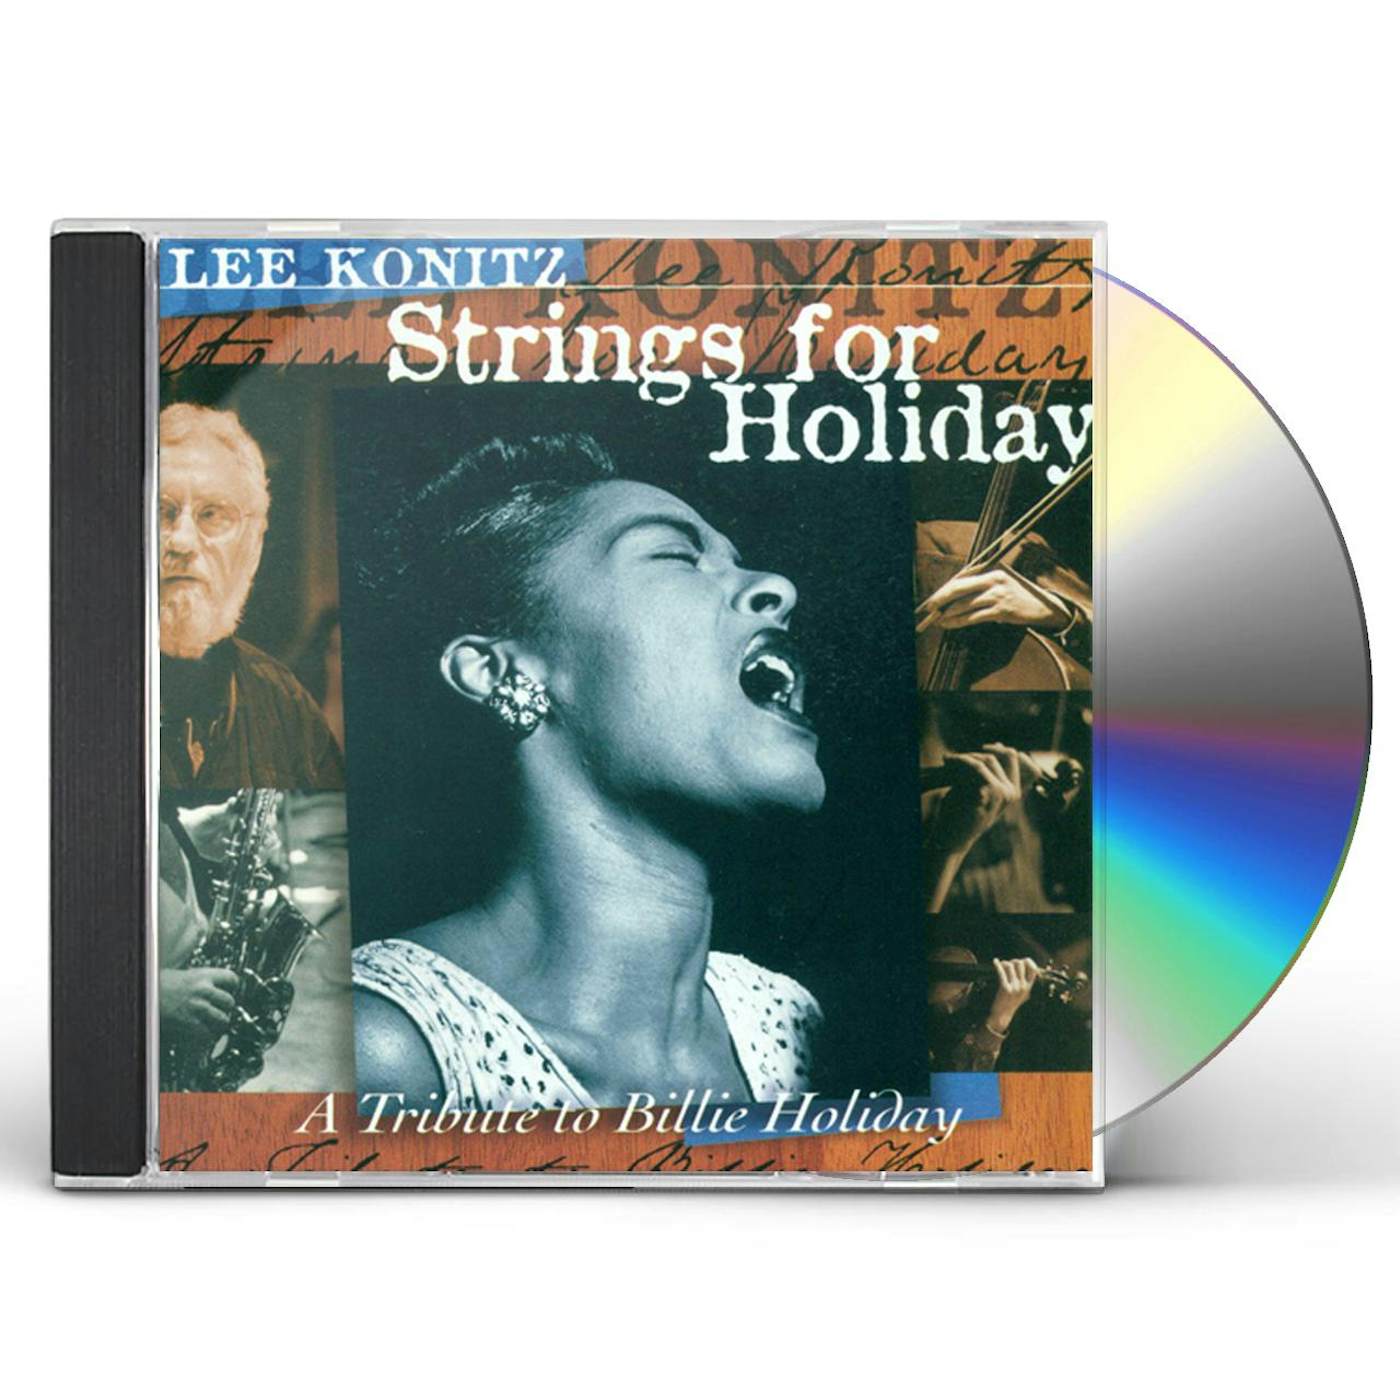 Lee Konitz STRINGS FOR HOLIDAY CD